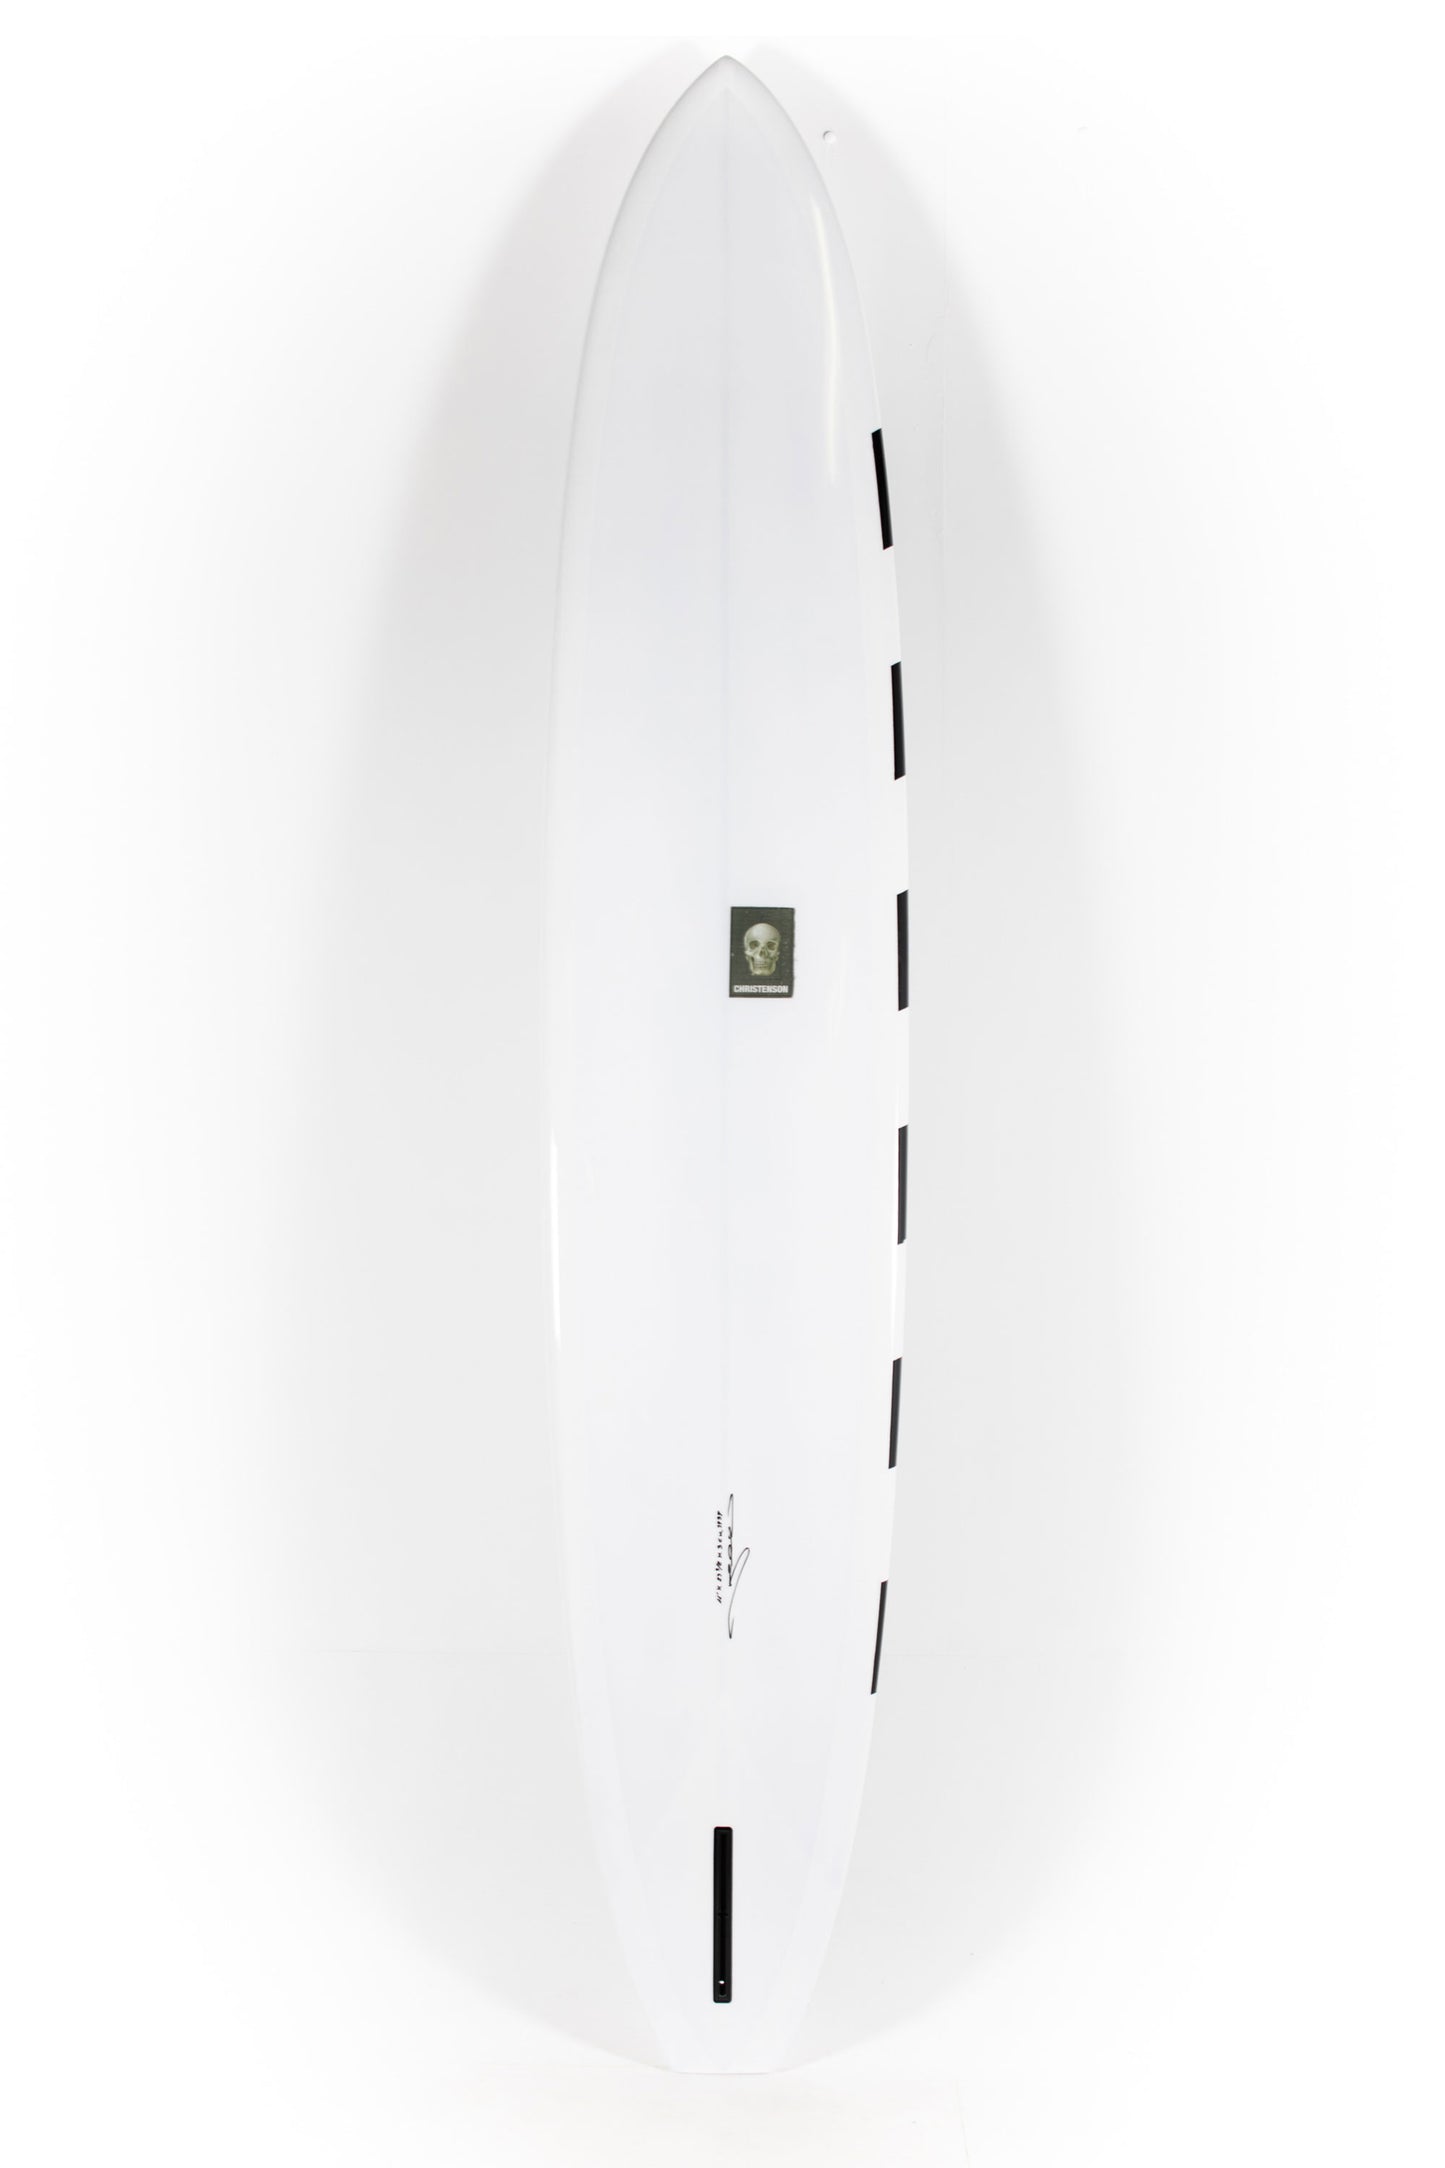 Pukas Surf Shop - Christenson Surfboards - CHRIS CRAFT - 11'0" x 23 3/8 x 3 - CX03439